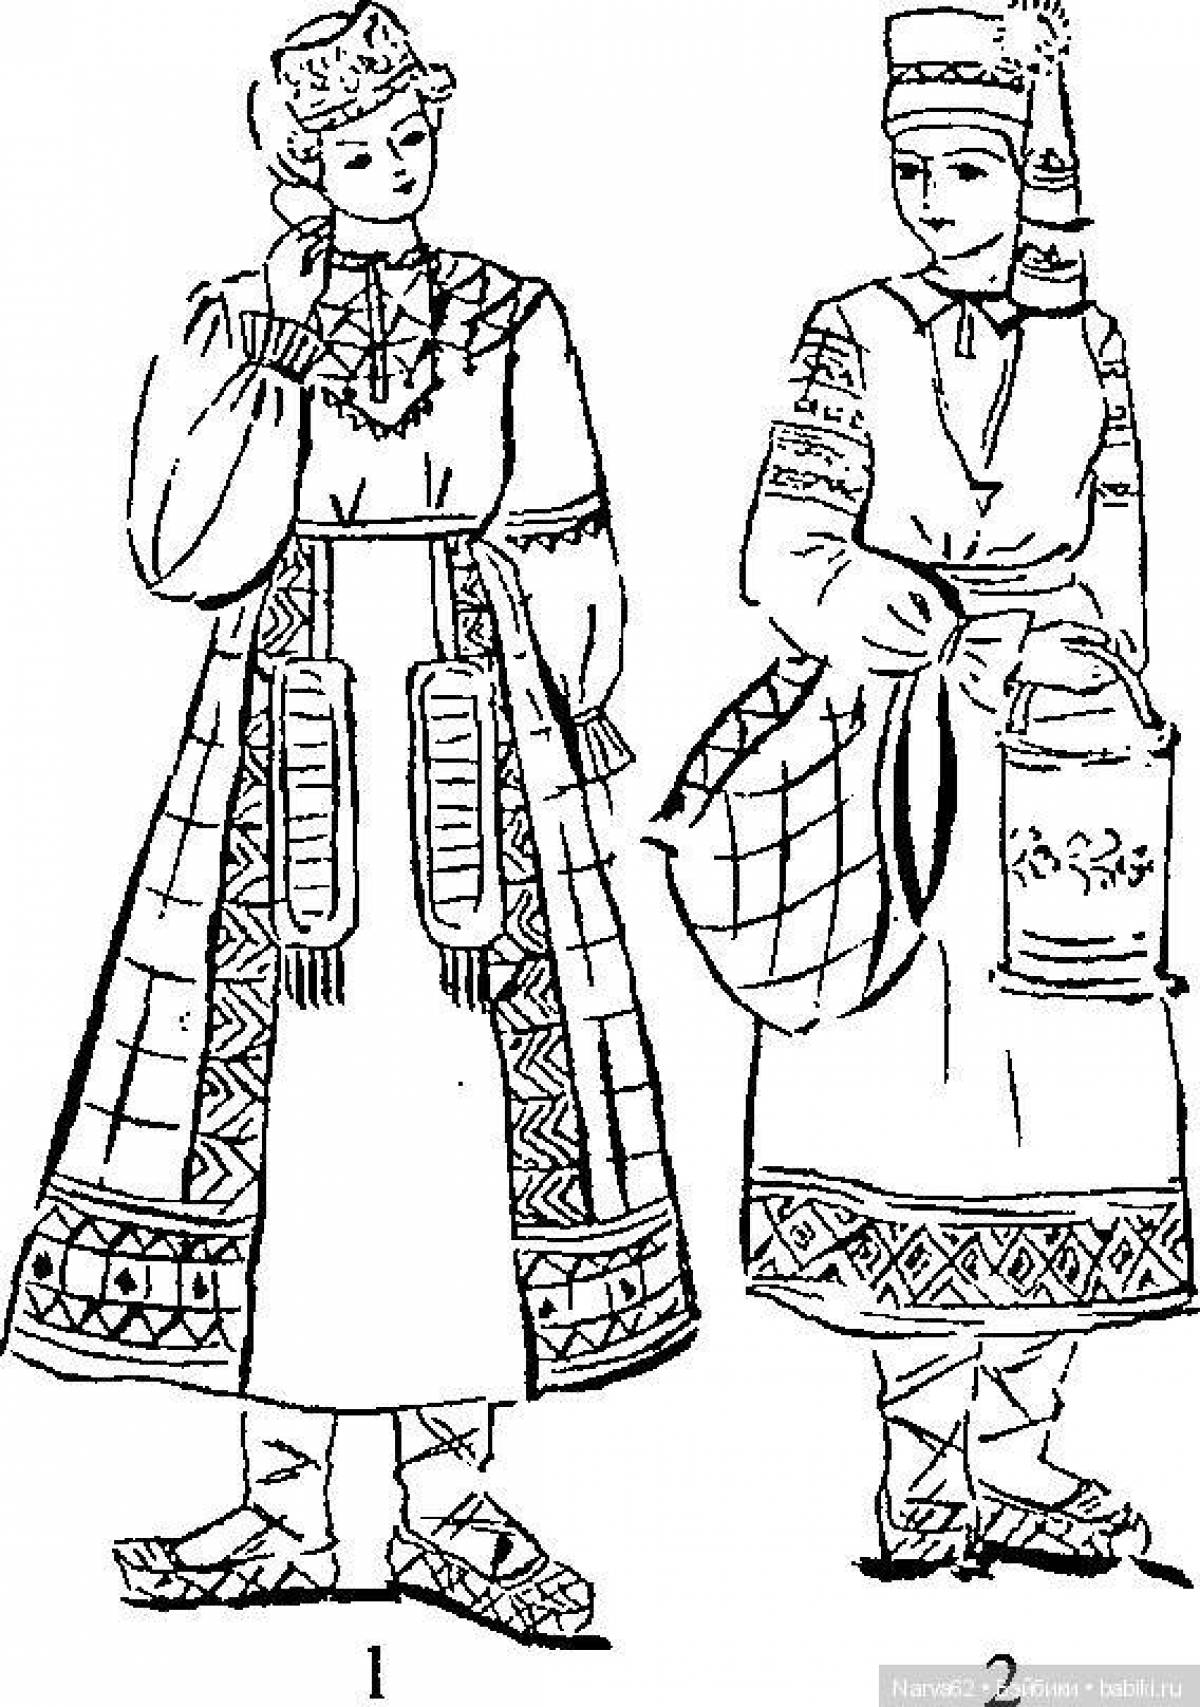 Alluring Russian women's folk costume